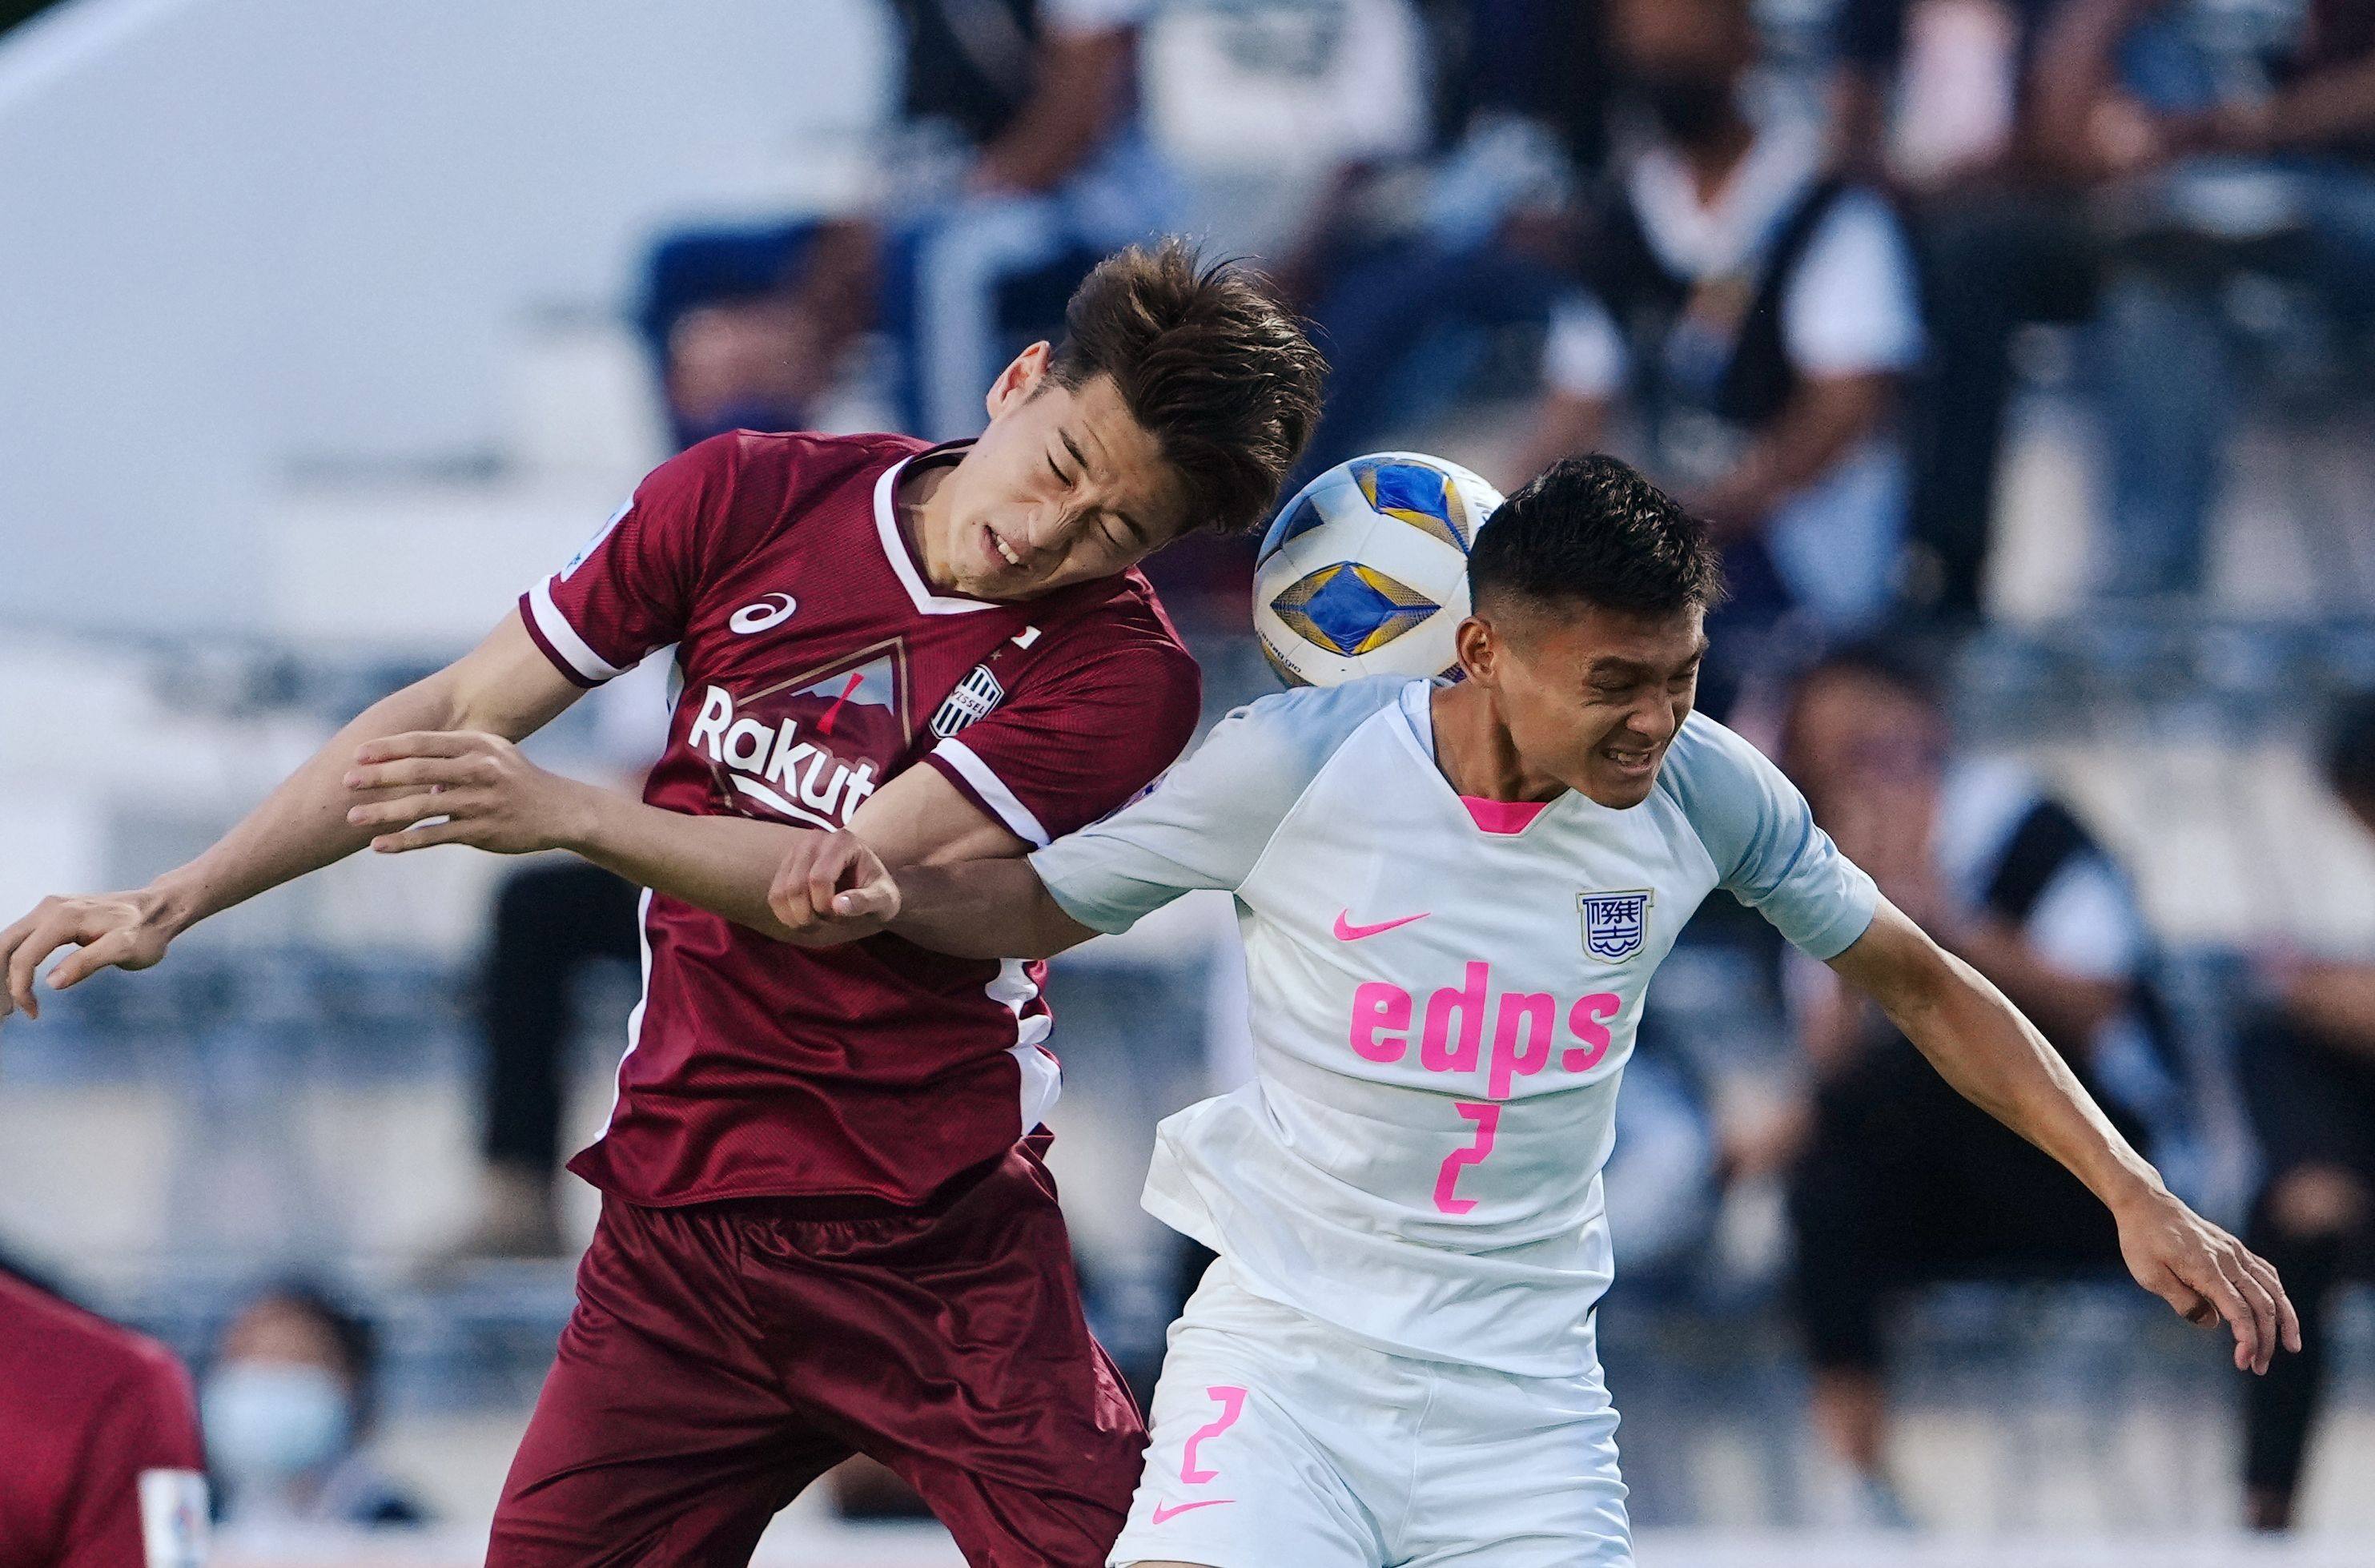 Vissel Kobe’s Yuki Kobayashi in action with Kitchee’s Tsz Chun Law during the AFC Champions League Group J match. Photo: Reuters